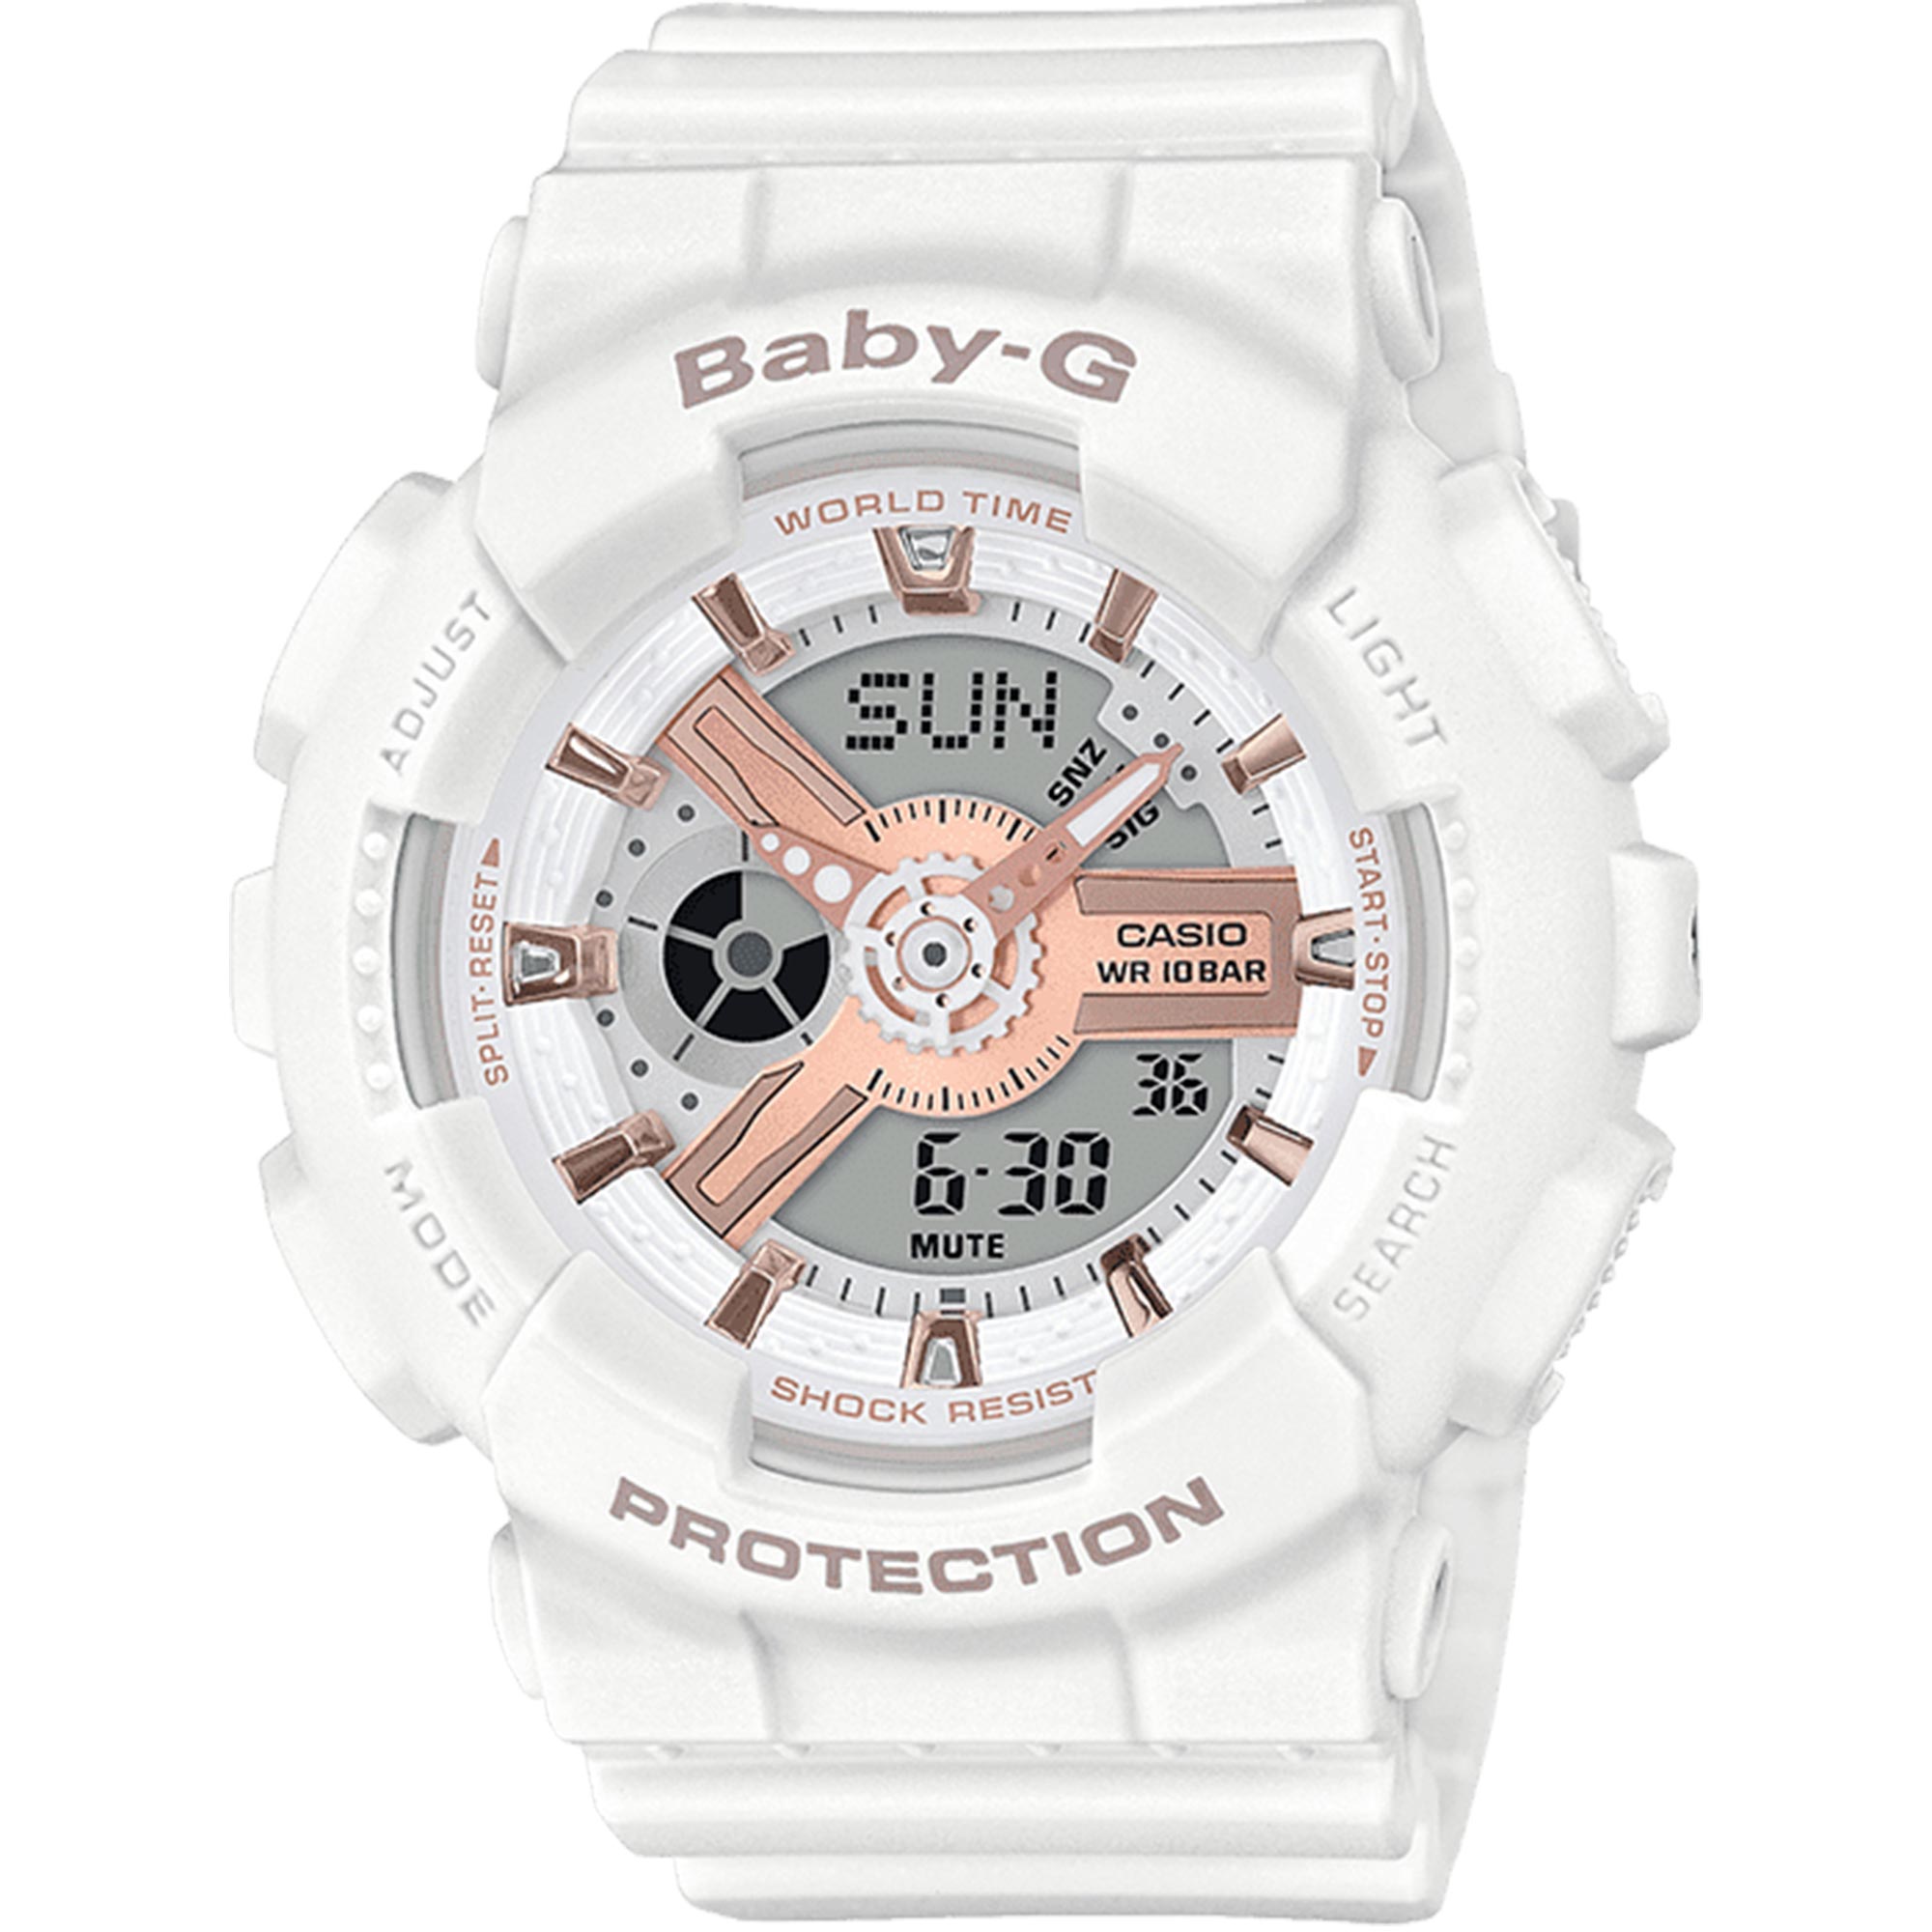 Casio Baby-g White Resin Hybrid Digital/analogue Ladies Watch Ba-110rg-7aer